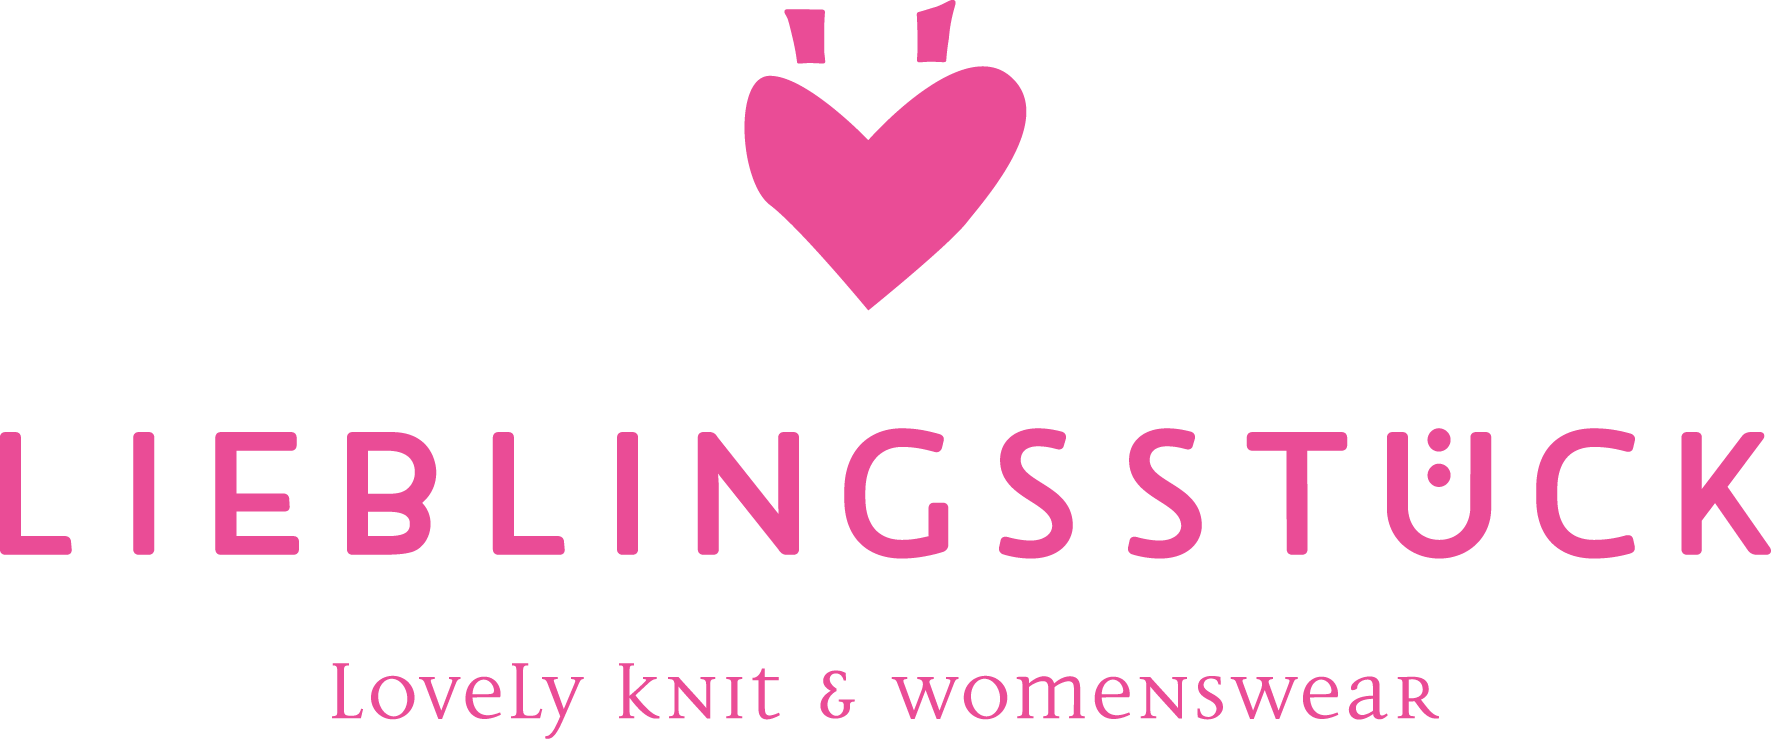 Lieblingsstueck Logo Corporate Identity Corporate Design Brand Lovely Knit & Womenswear